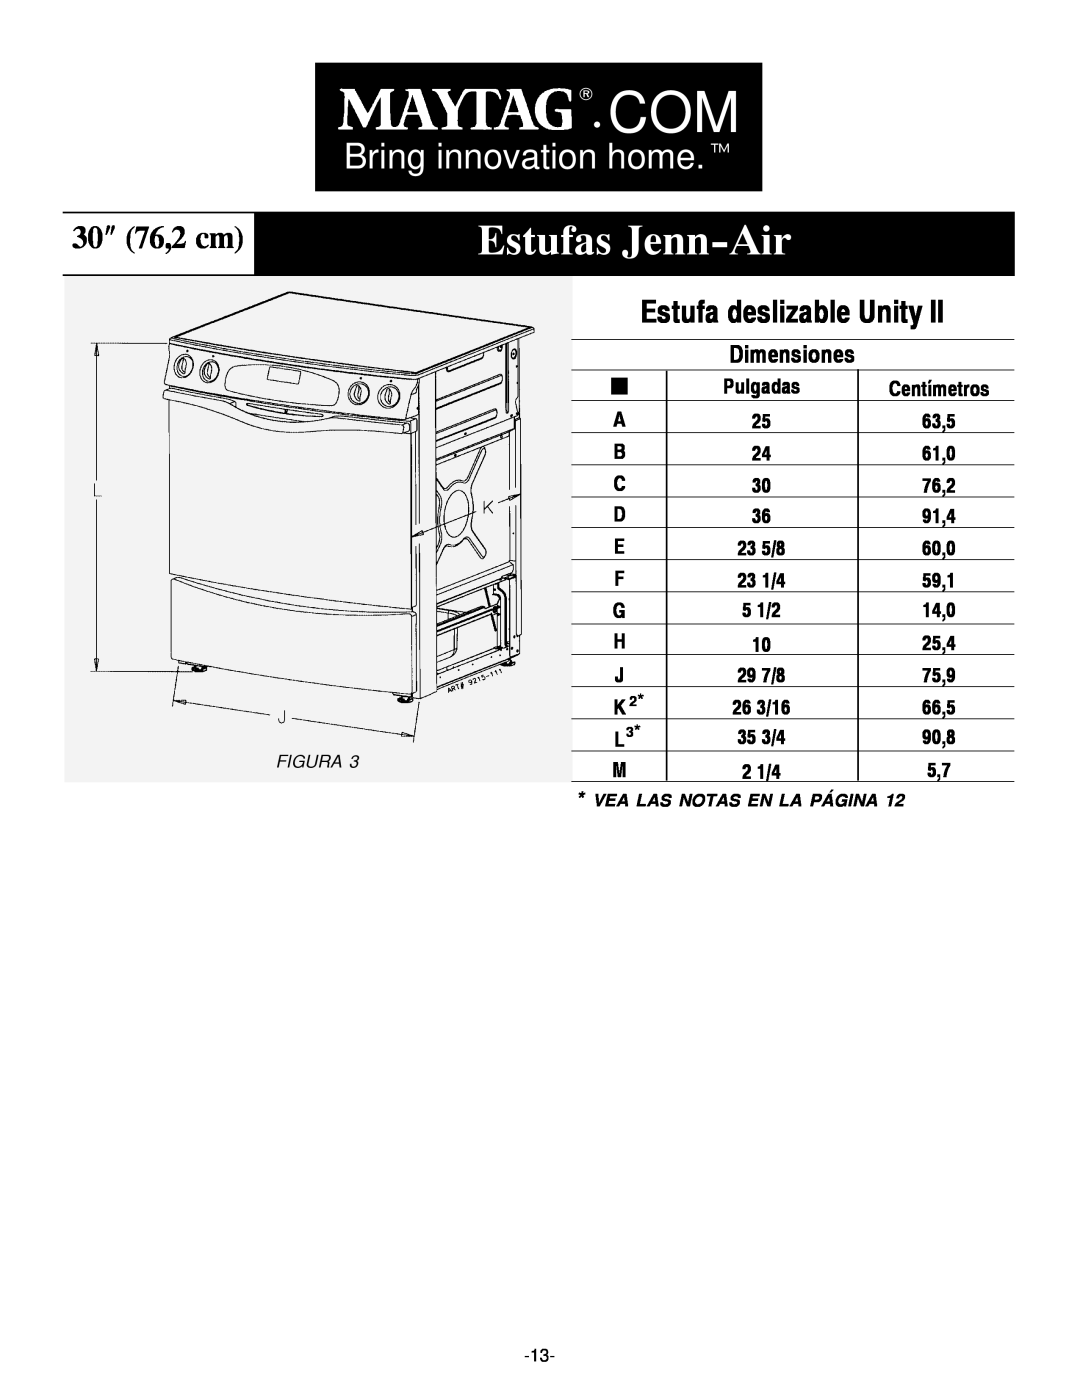 Jenn-Air Range installation manual Estufa deslizable Unity, Estufas Jenn-Air, Bring innovation home.t, 30 76,2 cm 